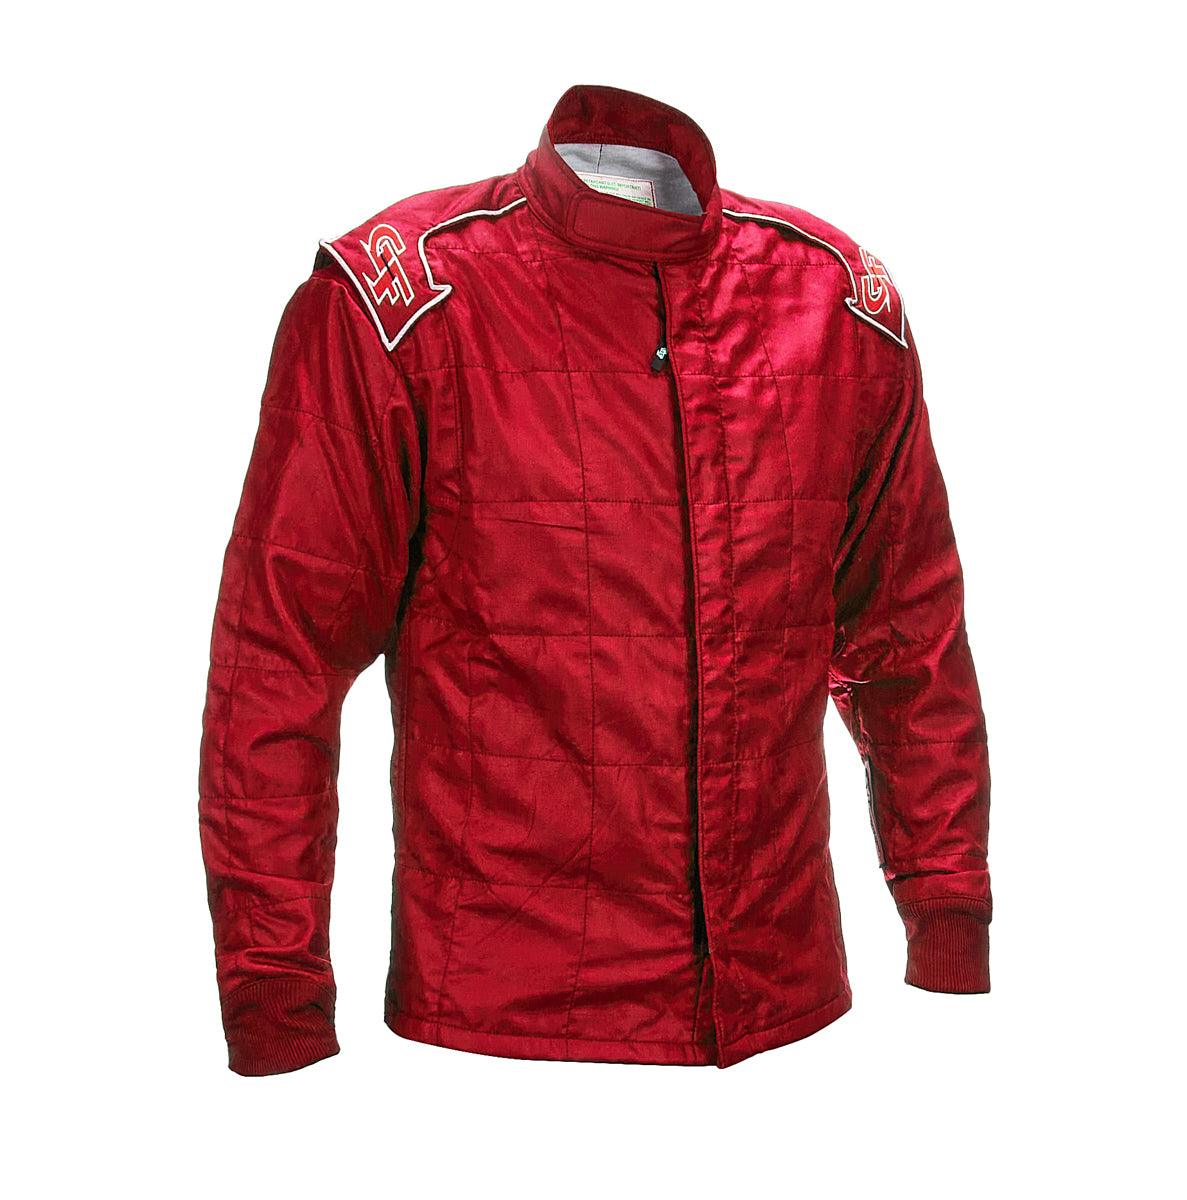 Jacket G-Limit Large Red SFI-5 - Burlile Performance Products